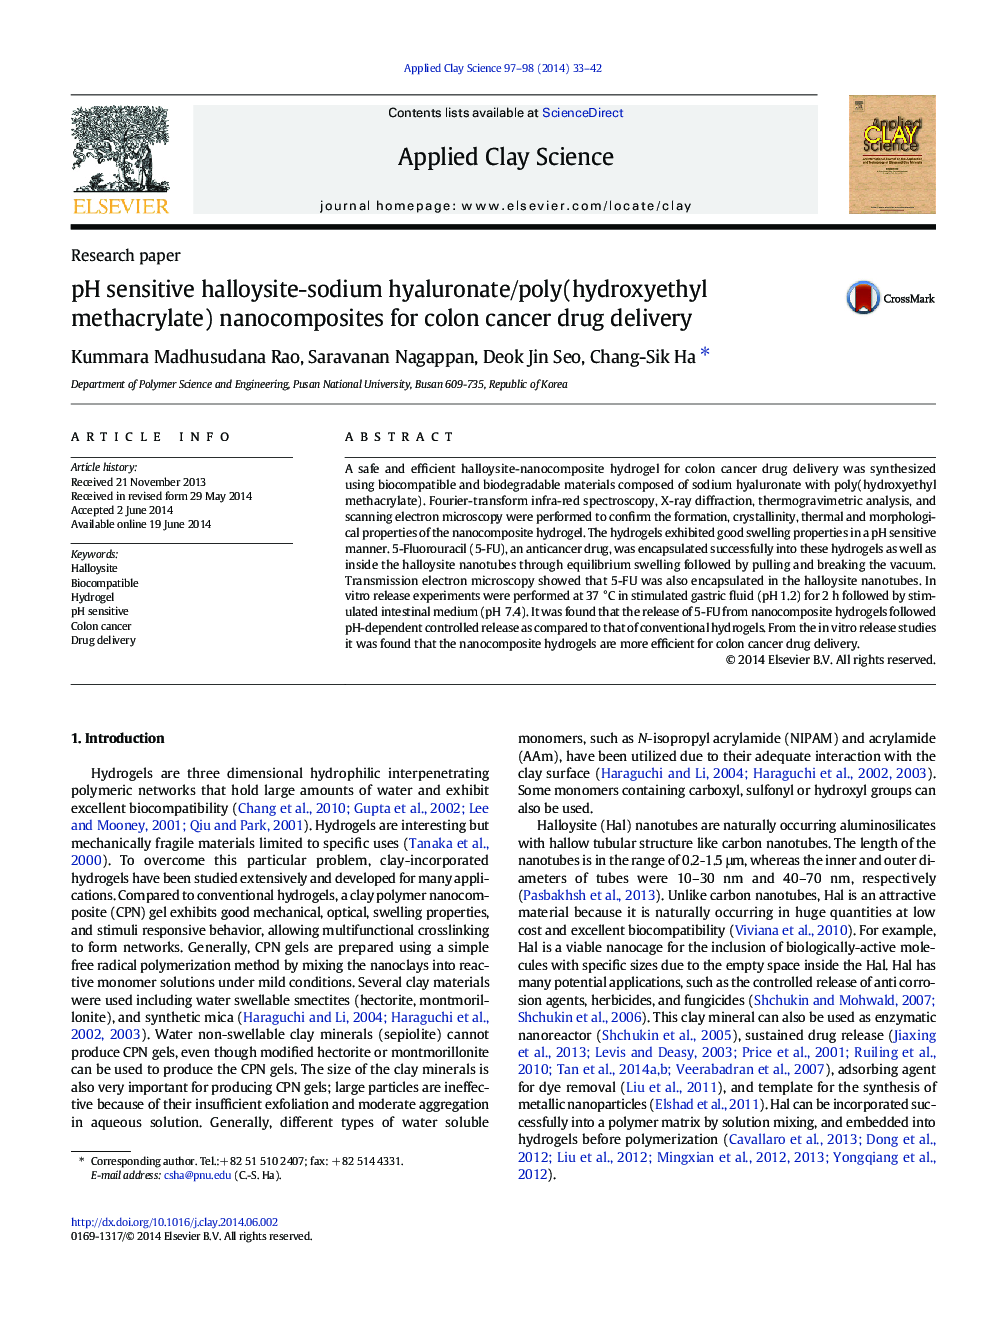 pH sensitive halloysite-sodium hyaluronate/poly(hydroxyethyl methacrylate) nanocomposites for colon cancer drug delivery